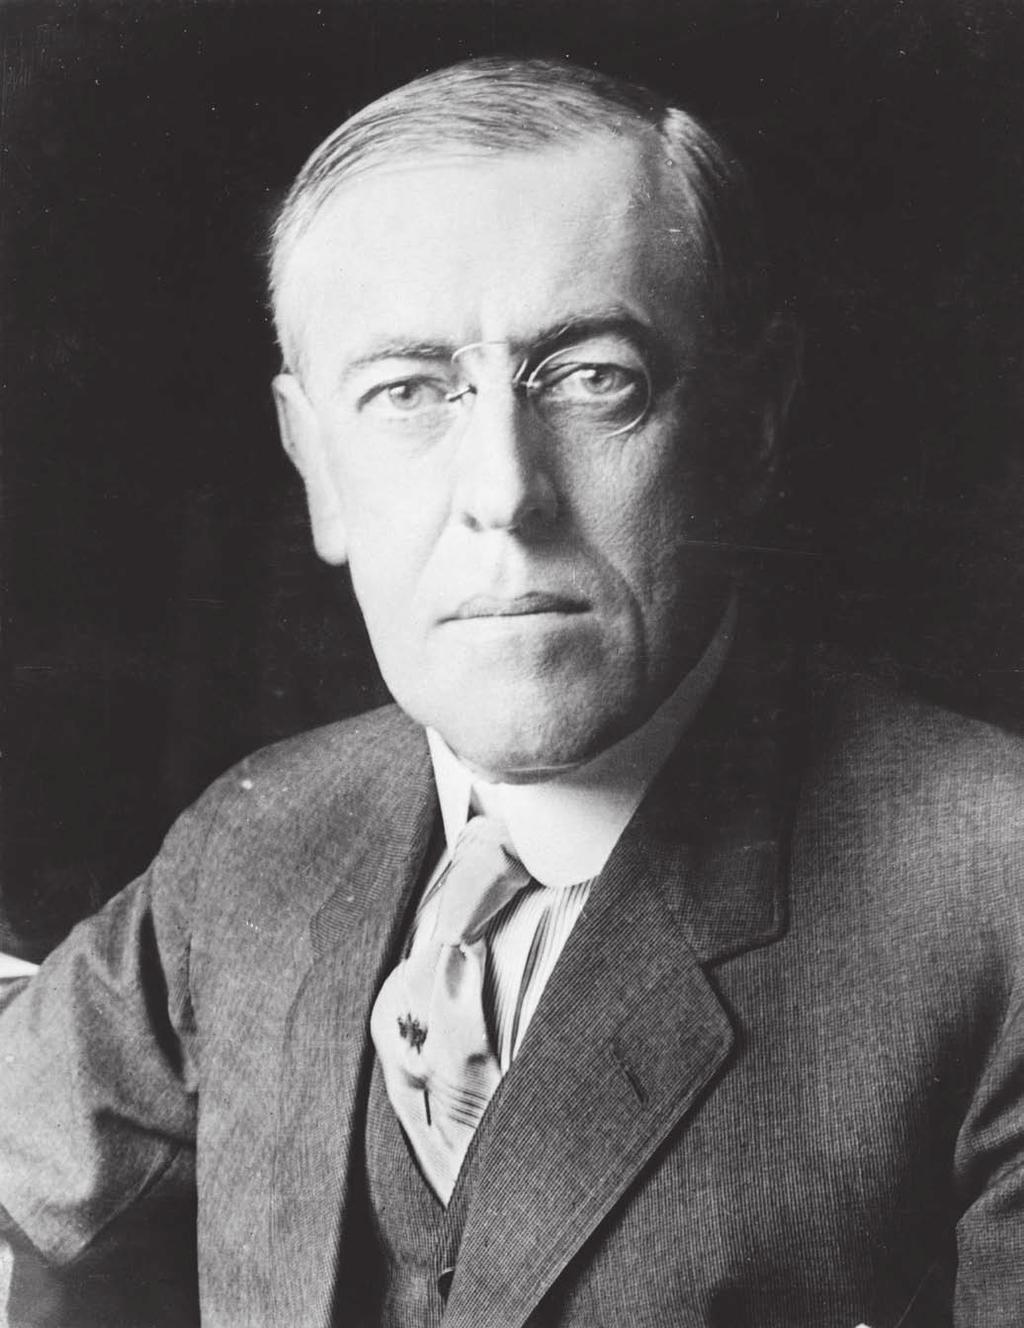 IMAGE 2: Woodrow Wilson. Circa 1916.